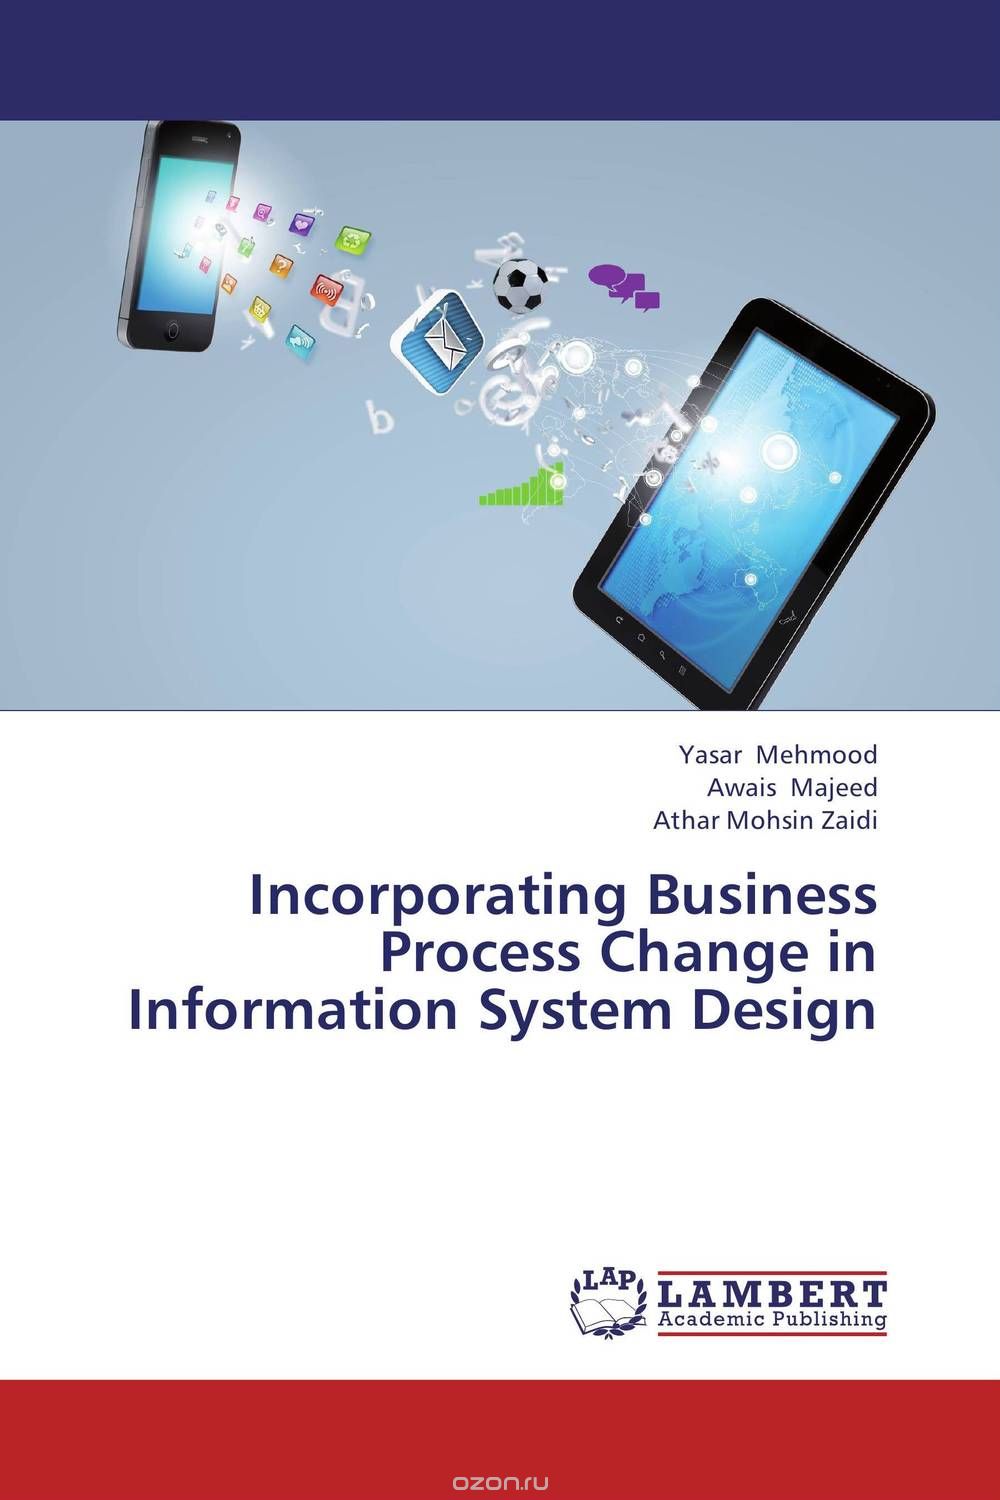 Скачать книгу "Incorporating Business Process Change in Information System Design"